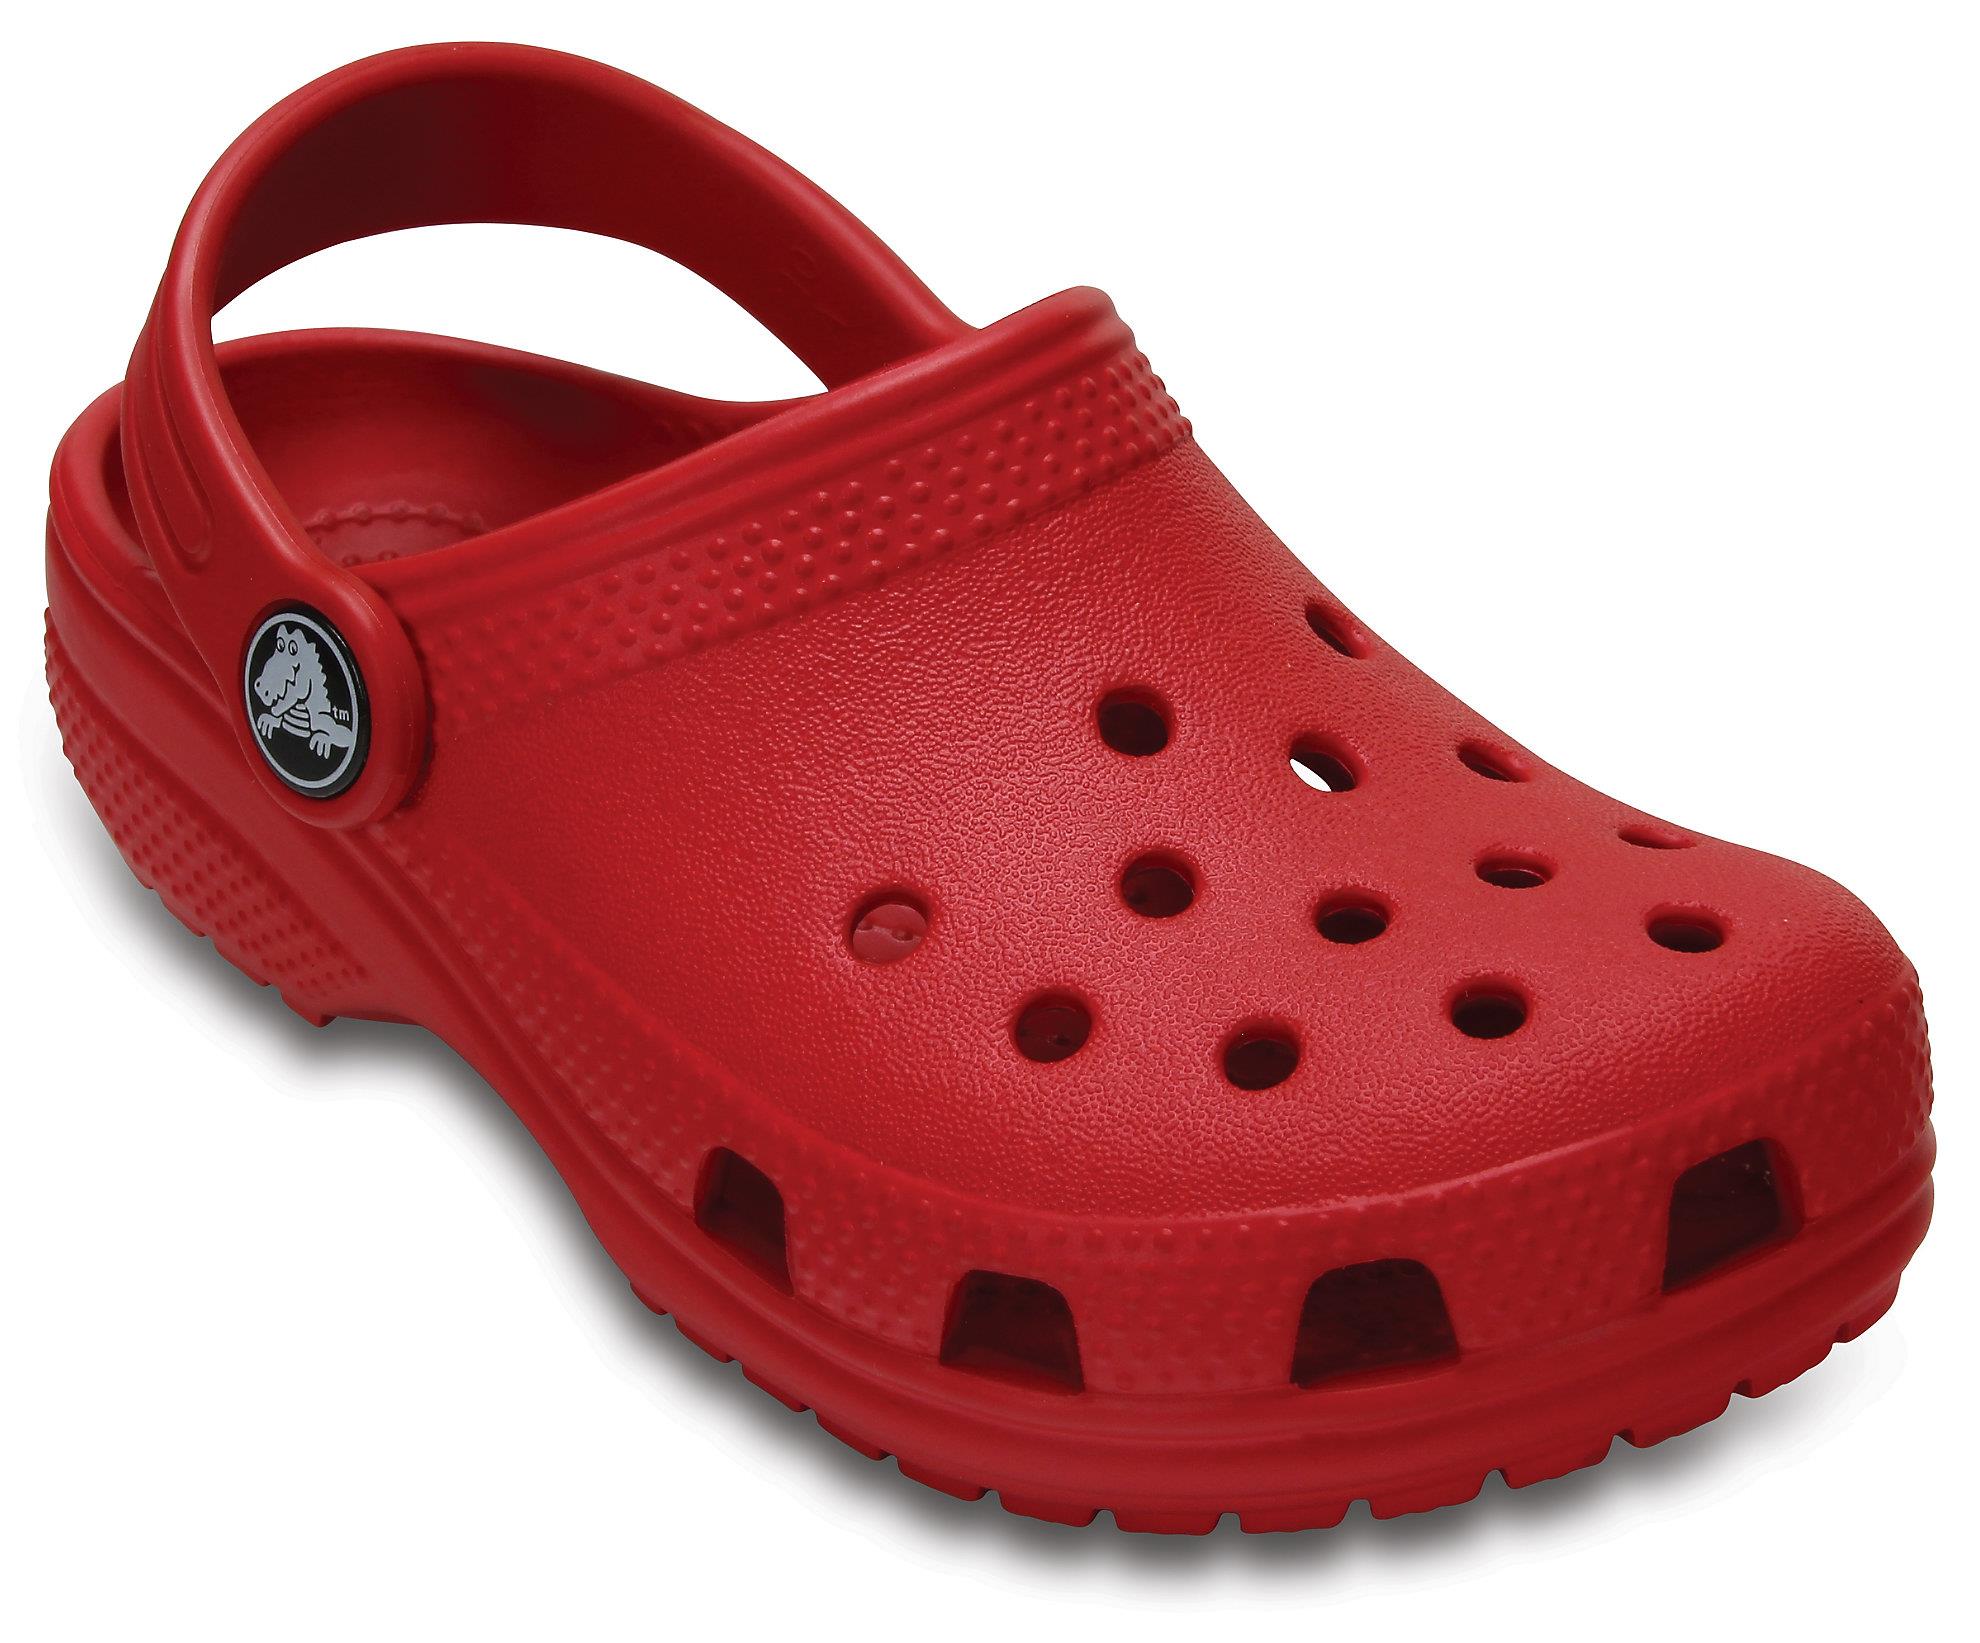 Crocs Kids Classic pepper red EVA mule sandal slip-on clog #204536